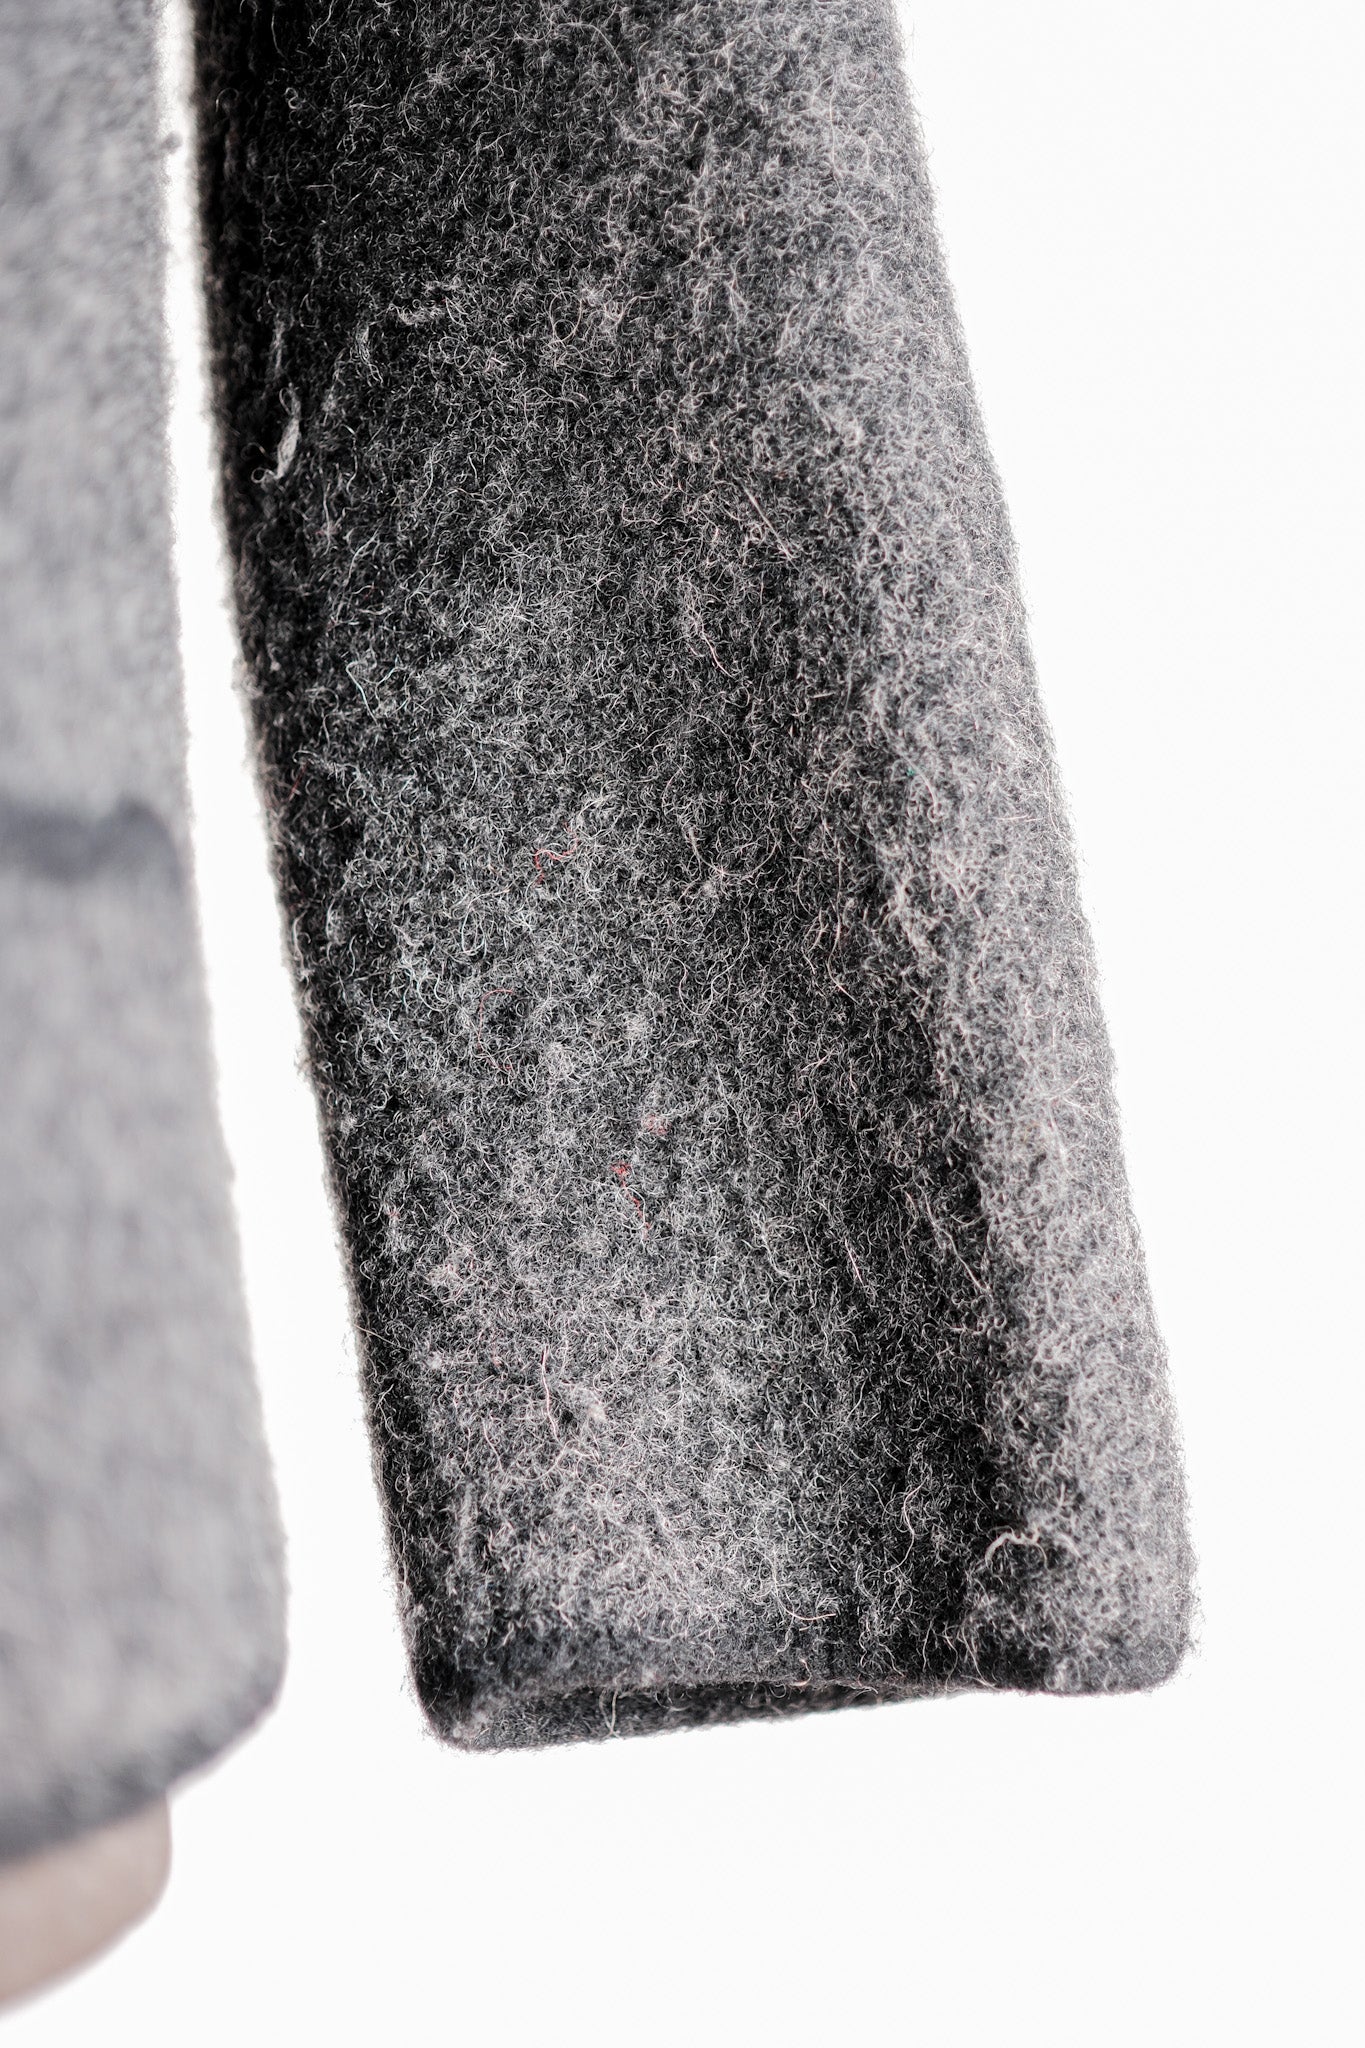 [〜80年代] Hofer Tyrolean羊毛夾克大小。44